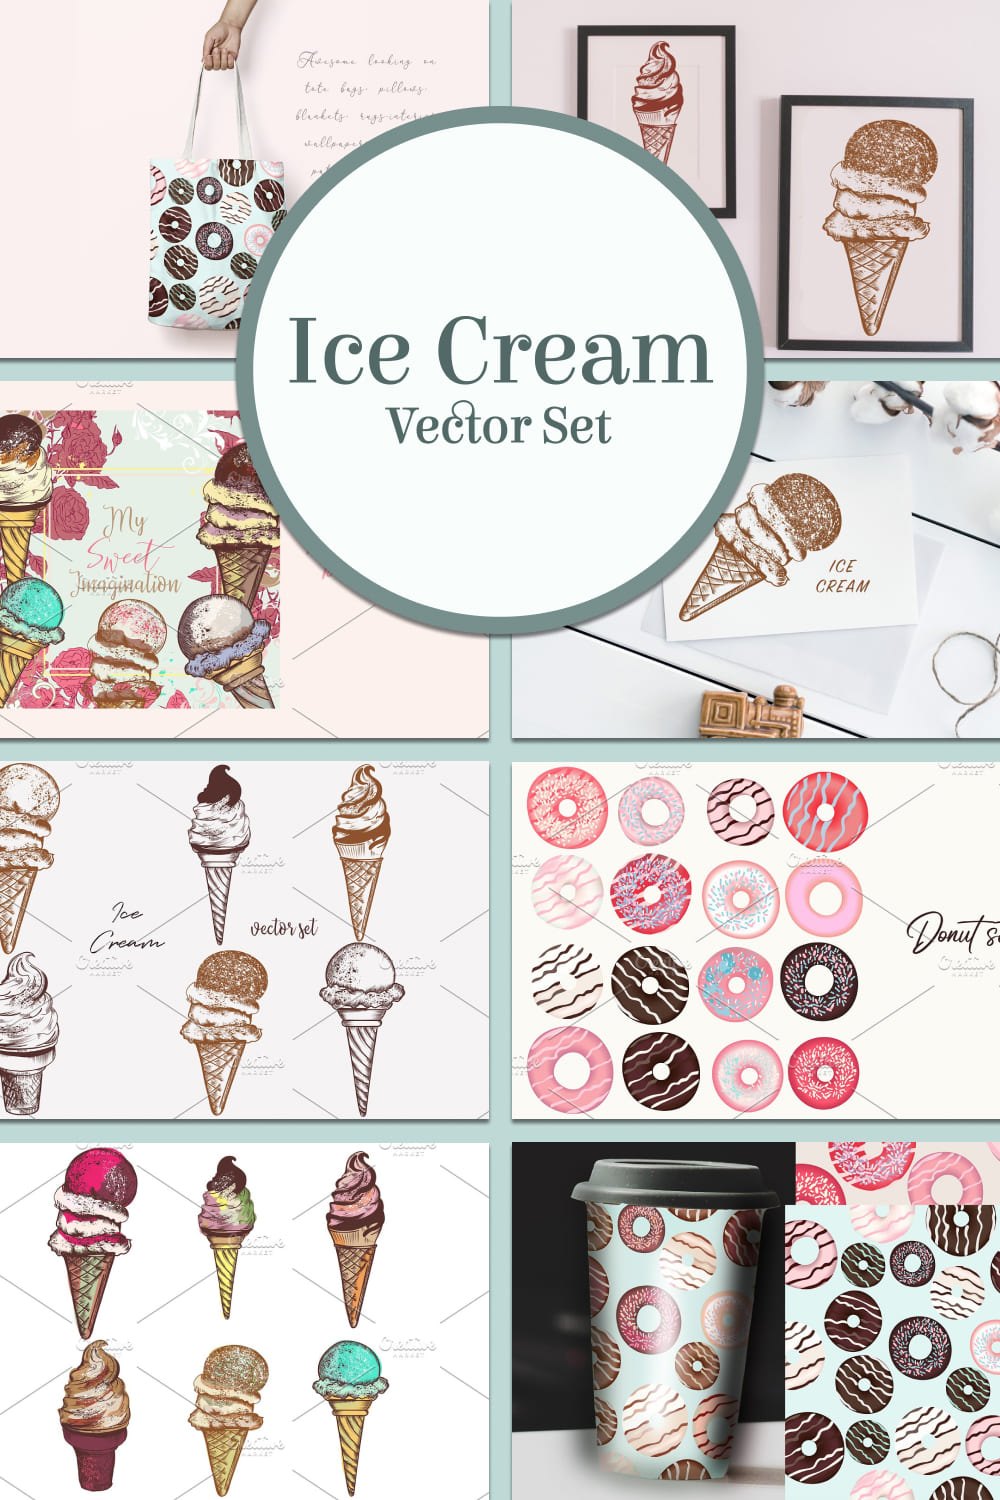 Ice cream vector set - pinterest image preview.